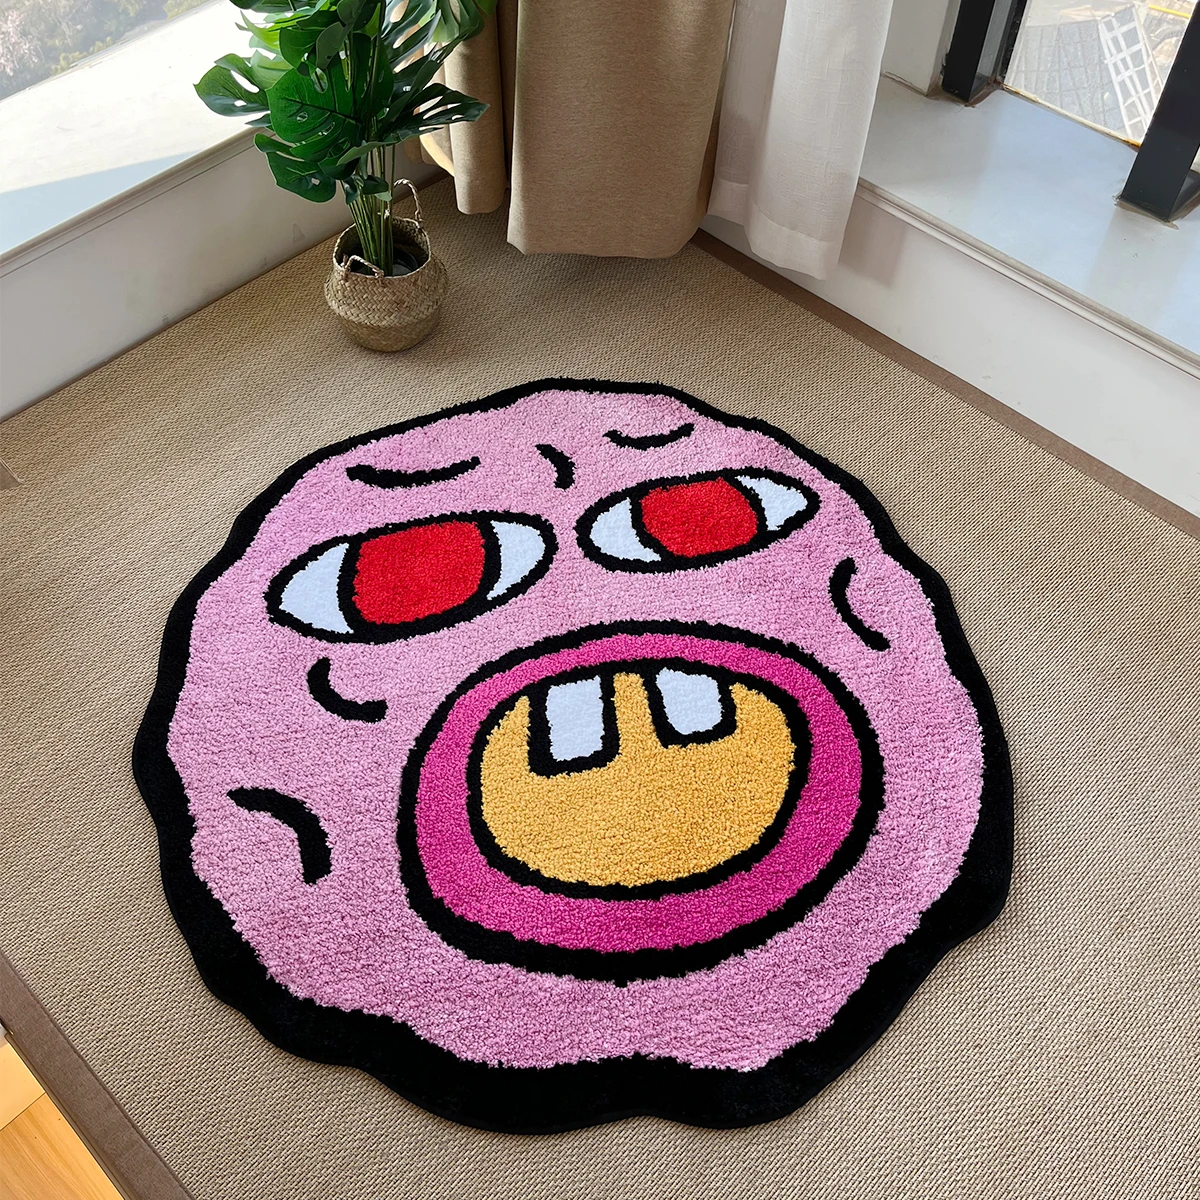 

Handmade Tufted Carpet Cherry Bomb Rug Pink Room Decor Kawaii Rug Small Rugs for Bedroom Cartoon Circle Punch Needle Carpet